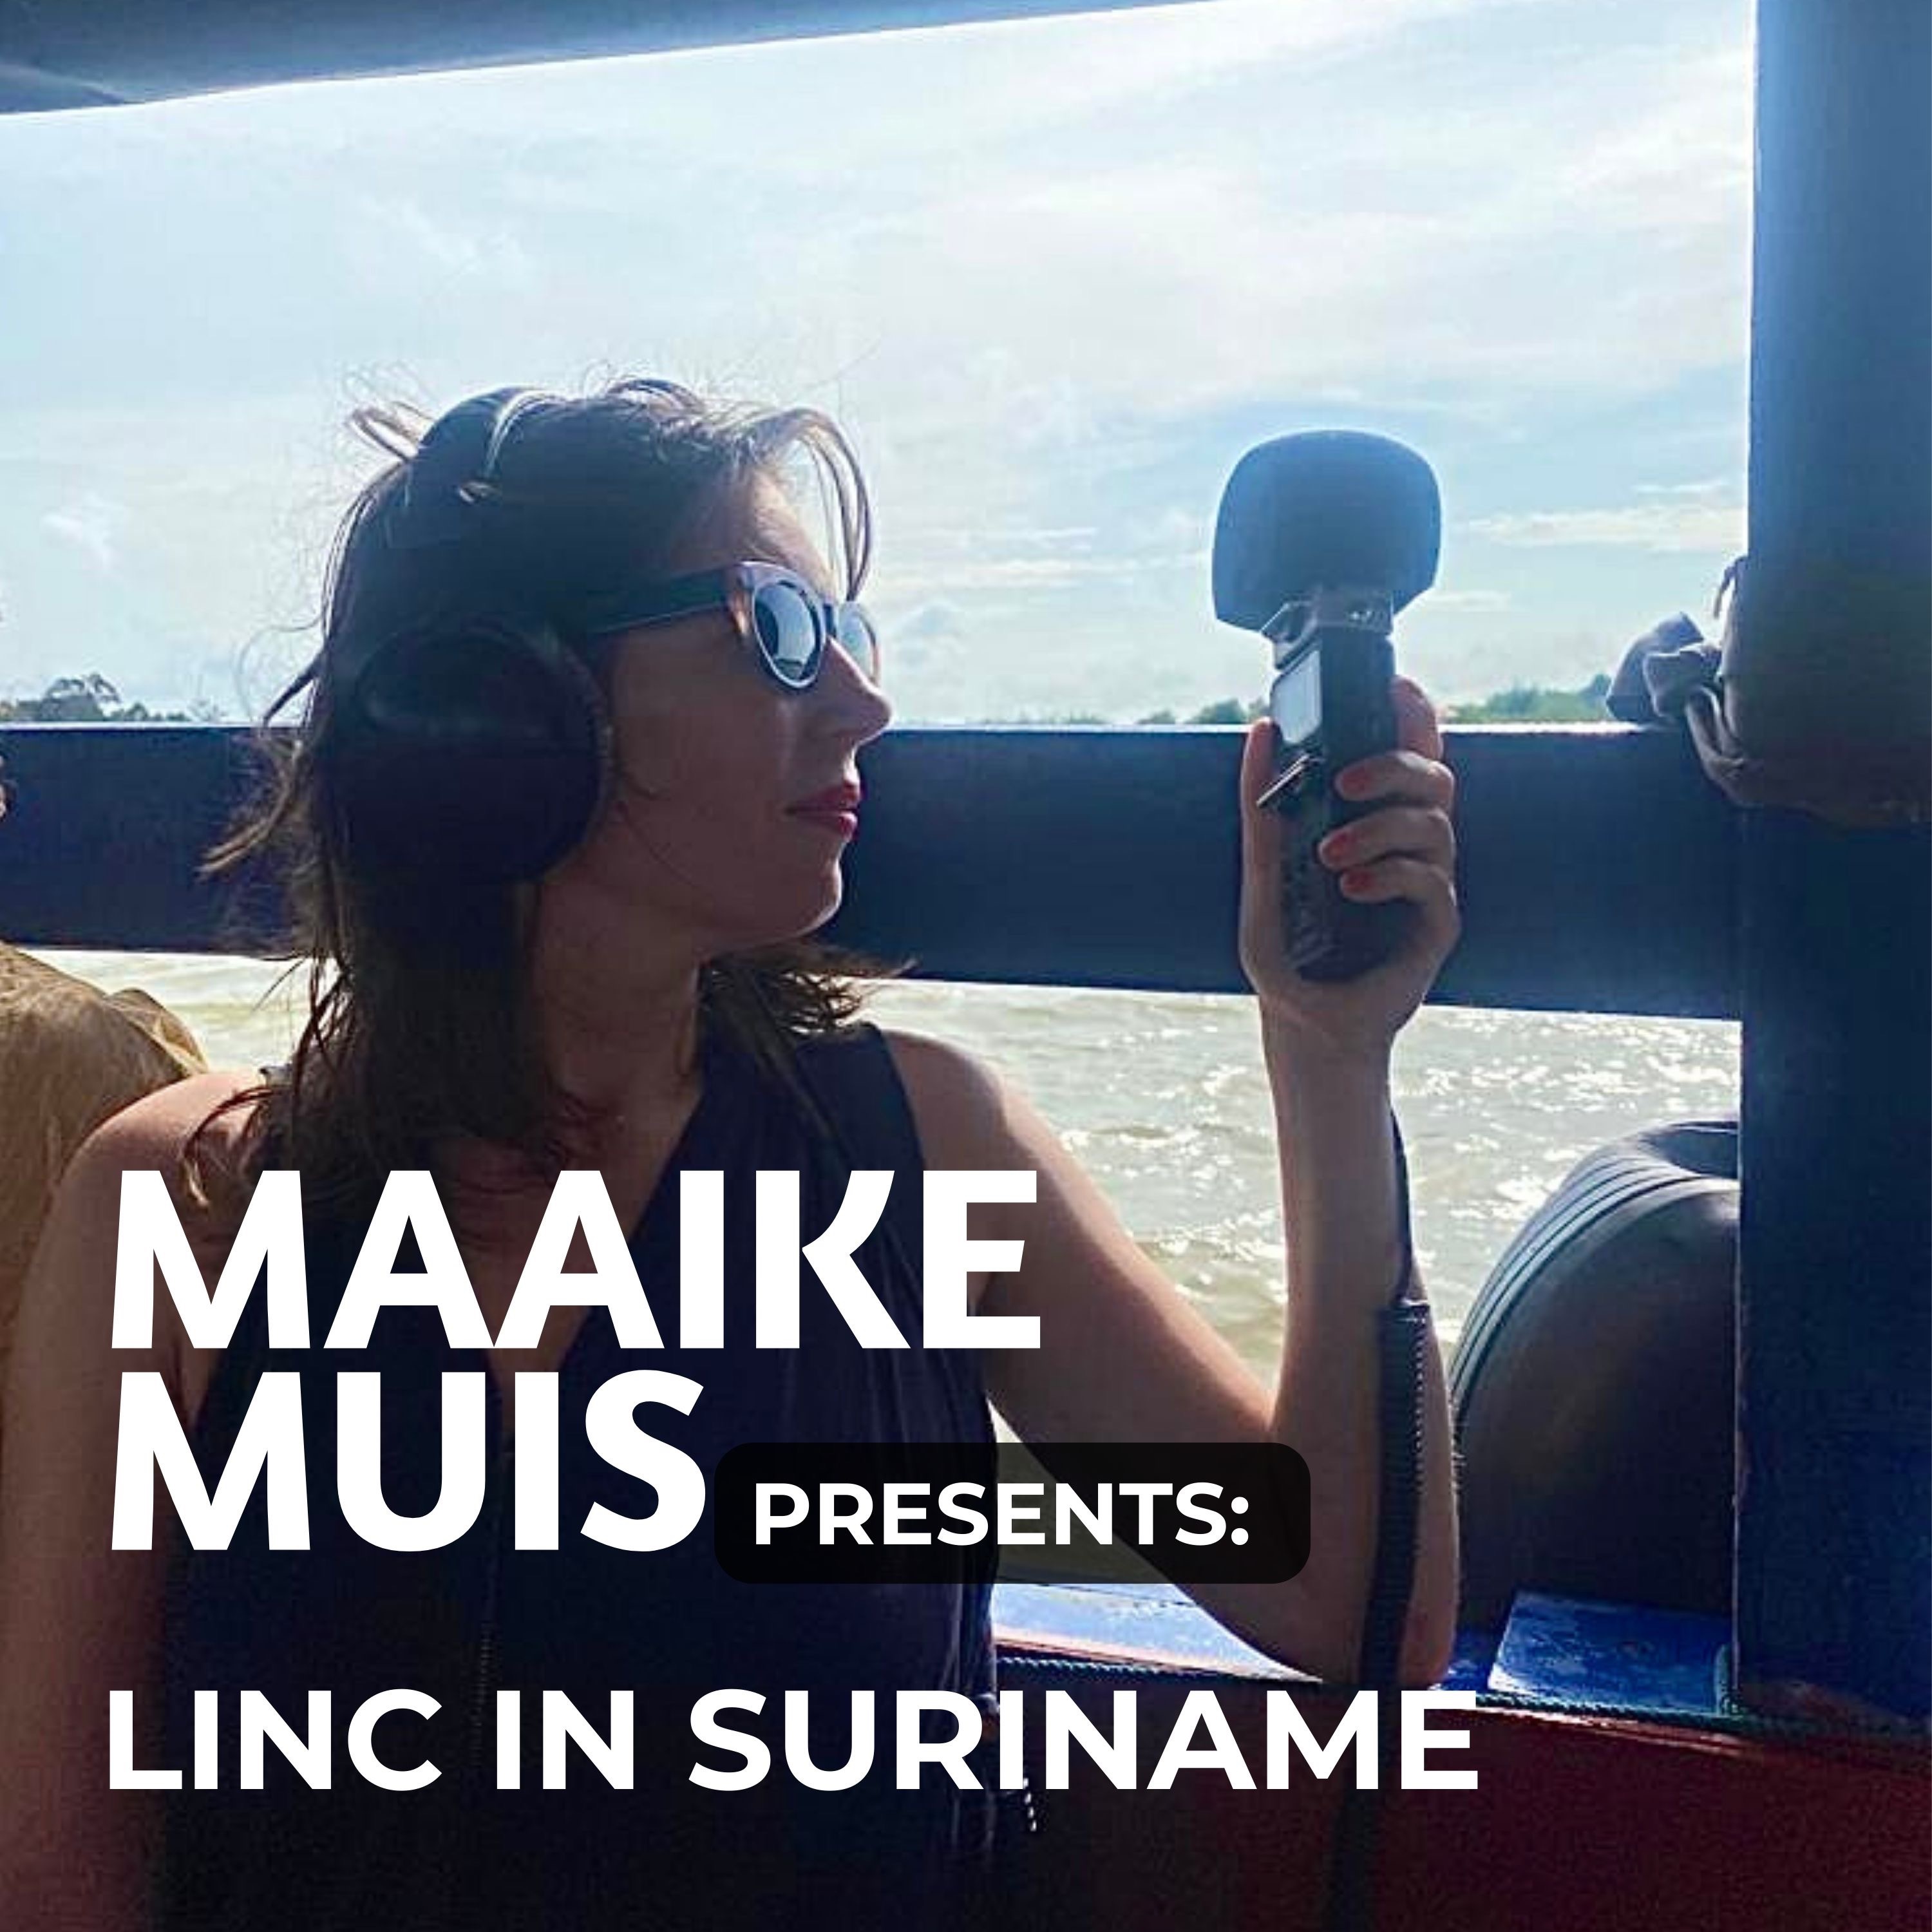 LINC (Leiderschap in Cultuur) in Suriname